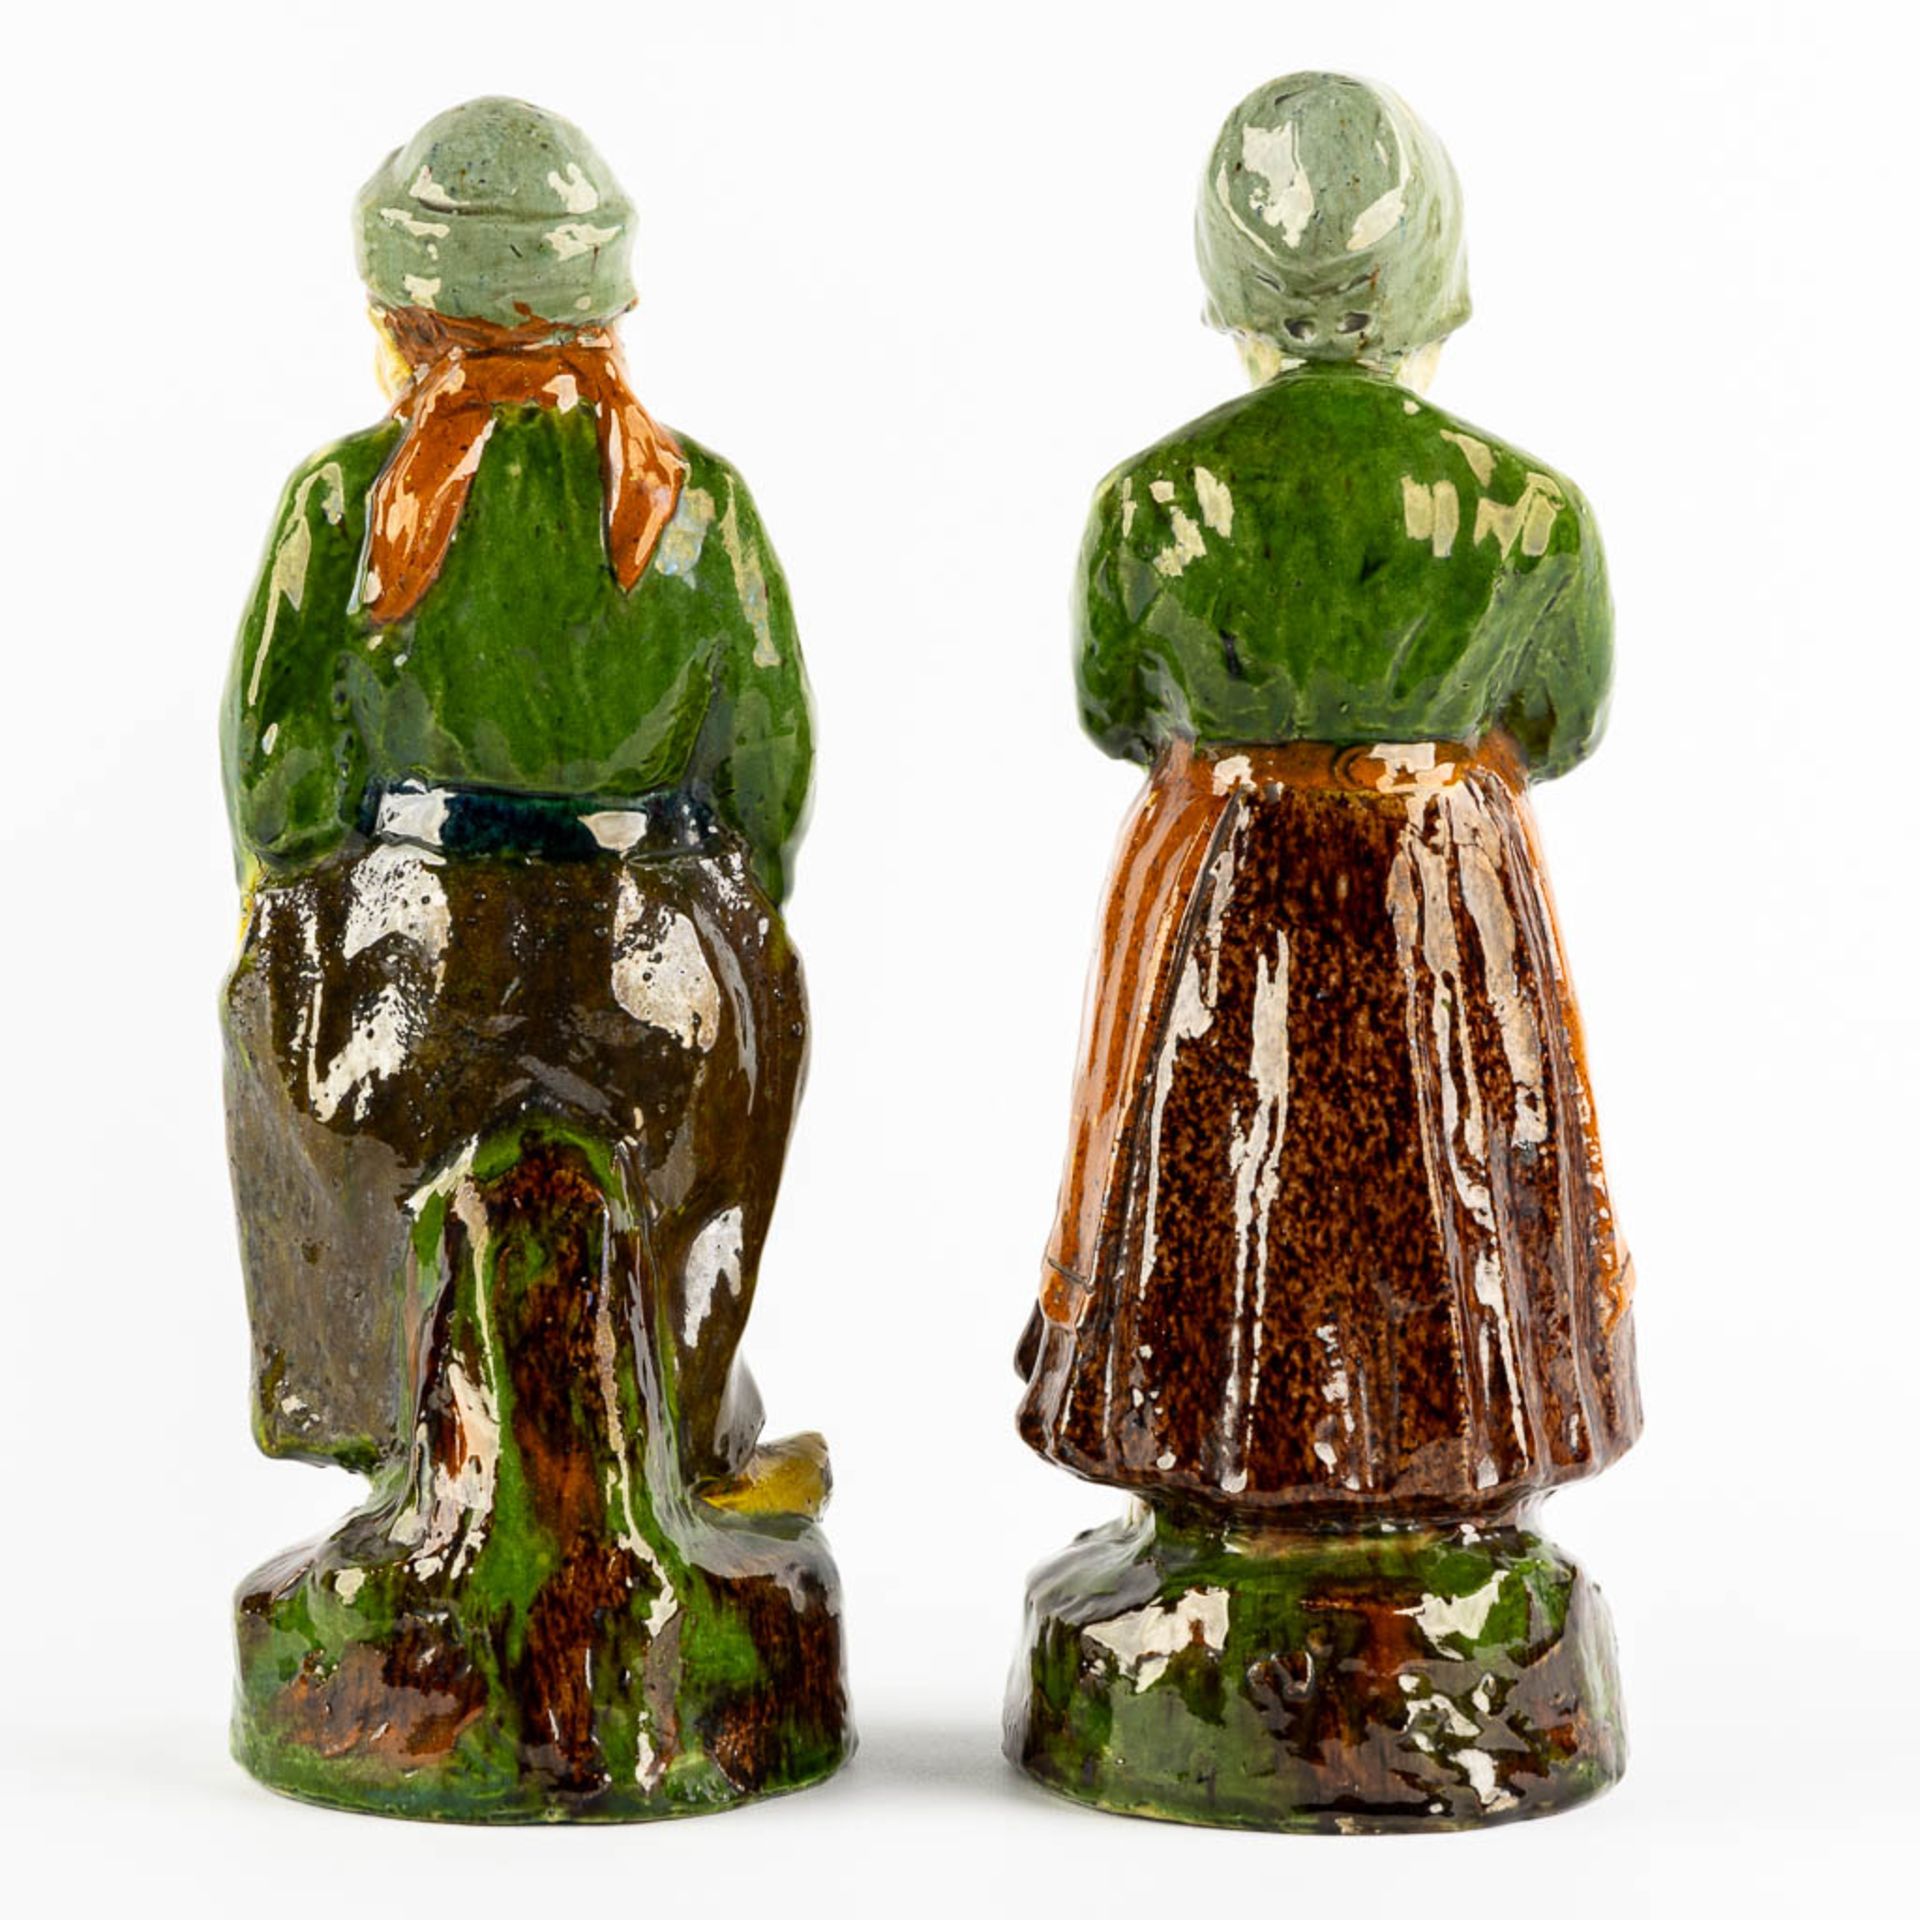 Figurine of a Man and Woman, Flemish Earthenware, possibly Caessens. Circa 1900. (H:32 x D:12 cm) - Bild 5 aus 9